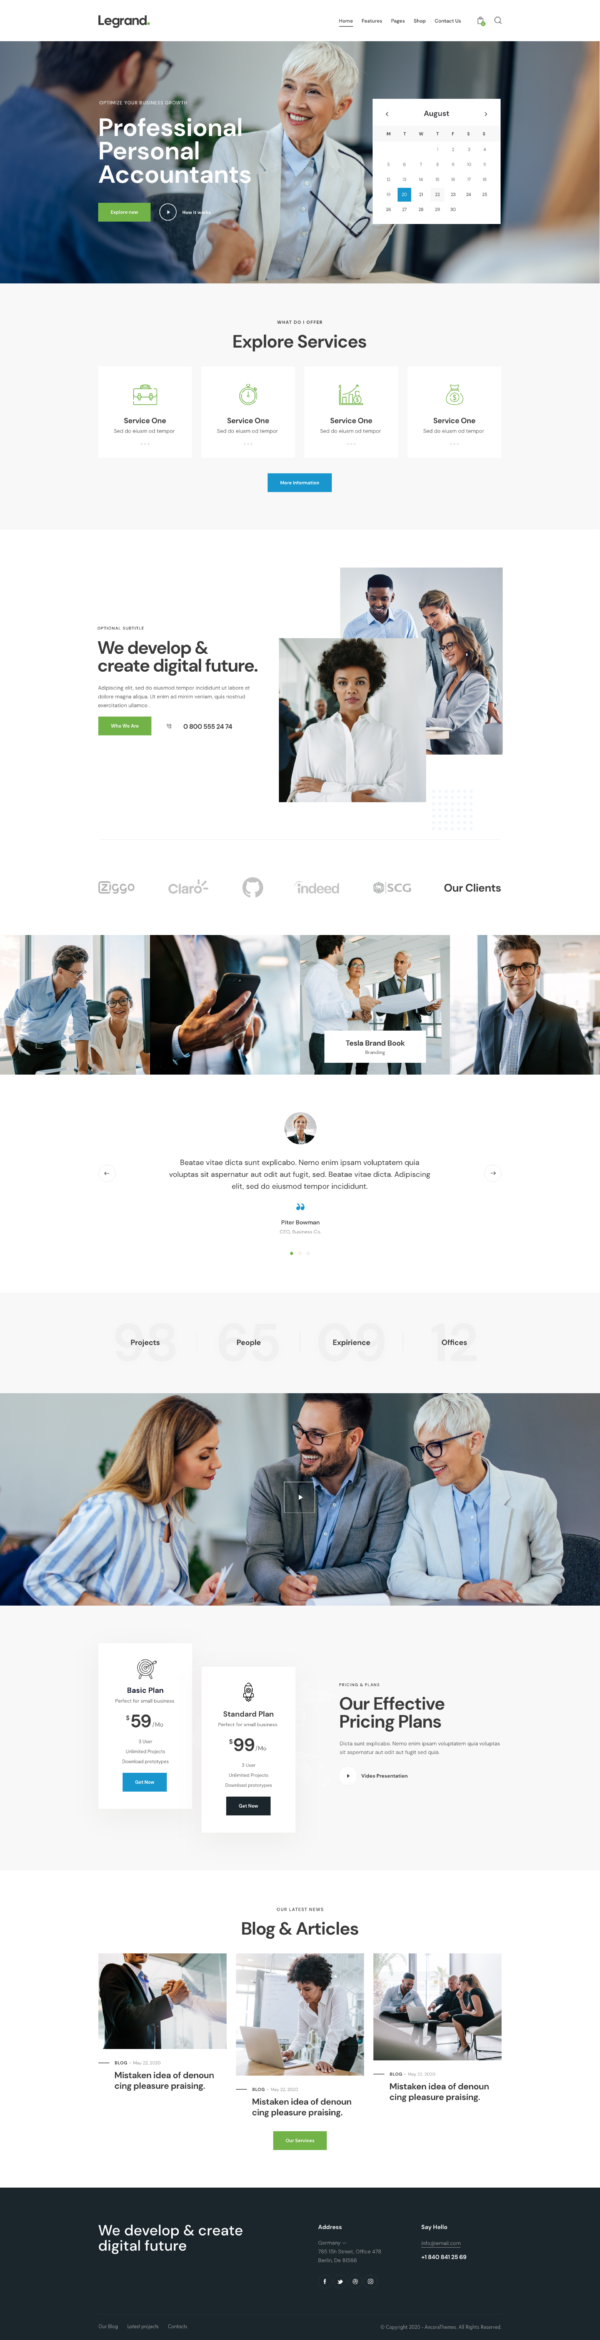 LeGrand | A Modern Multi-Purpose Business WordPress Theme